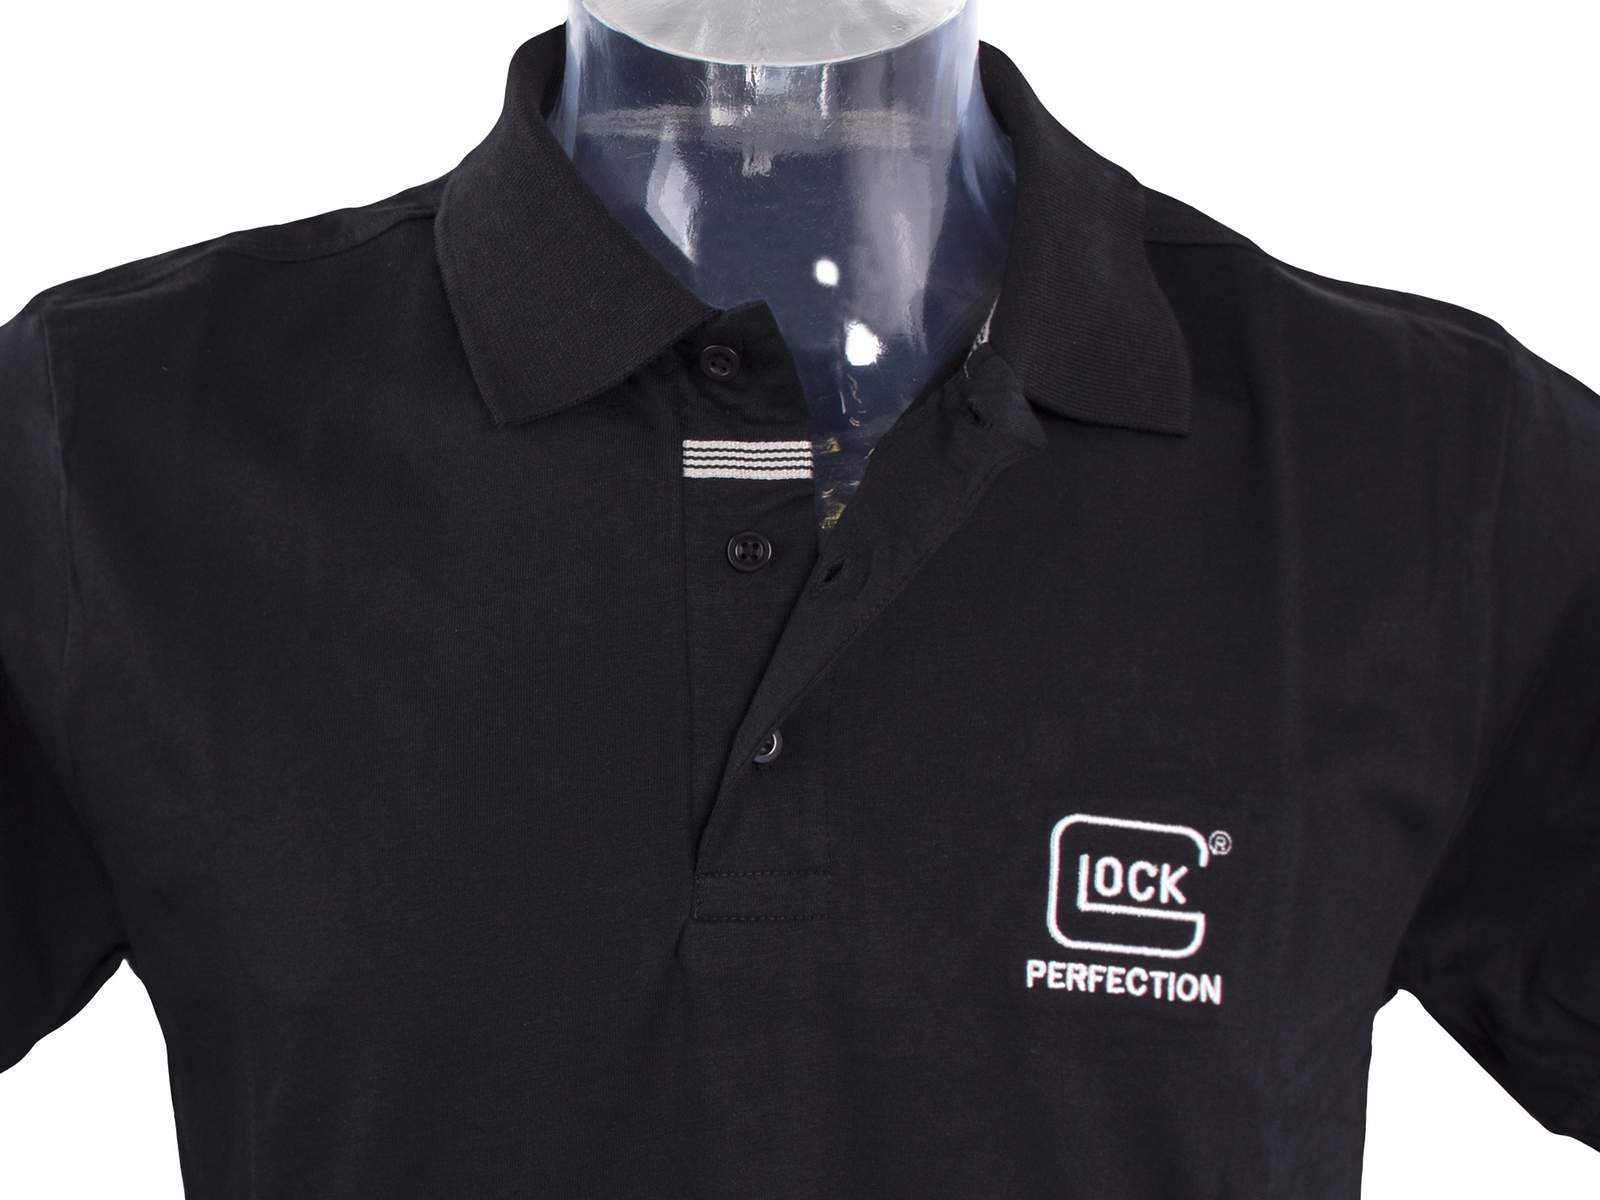 GLOCK APPAREL/Polo GLOCK Perfection ポロシャツ Black (size M)